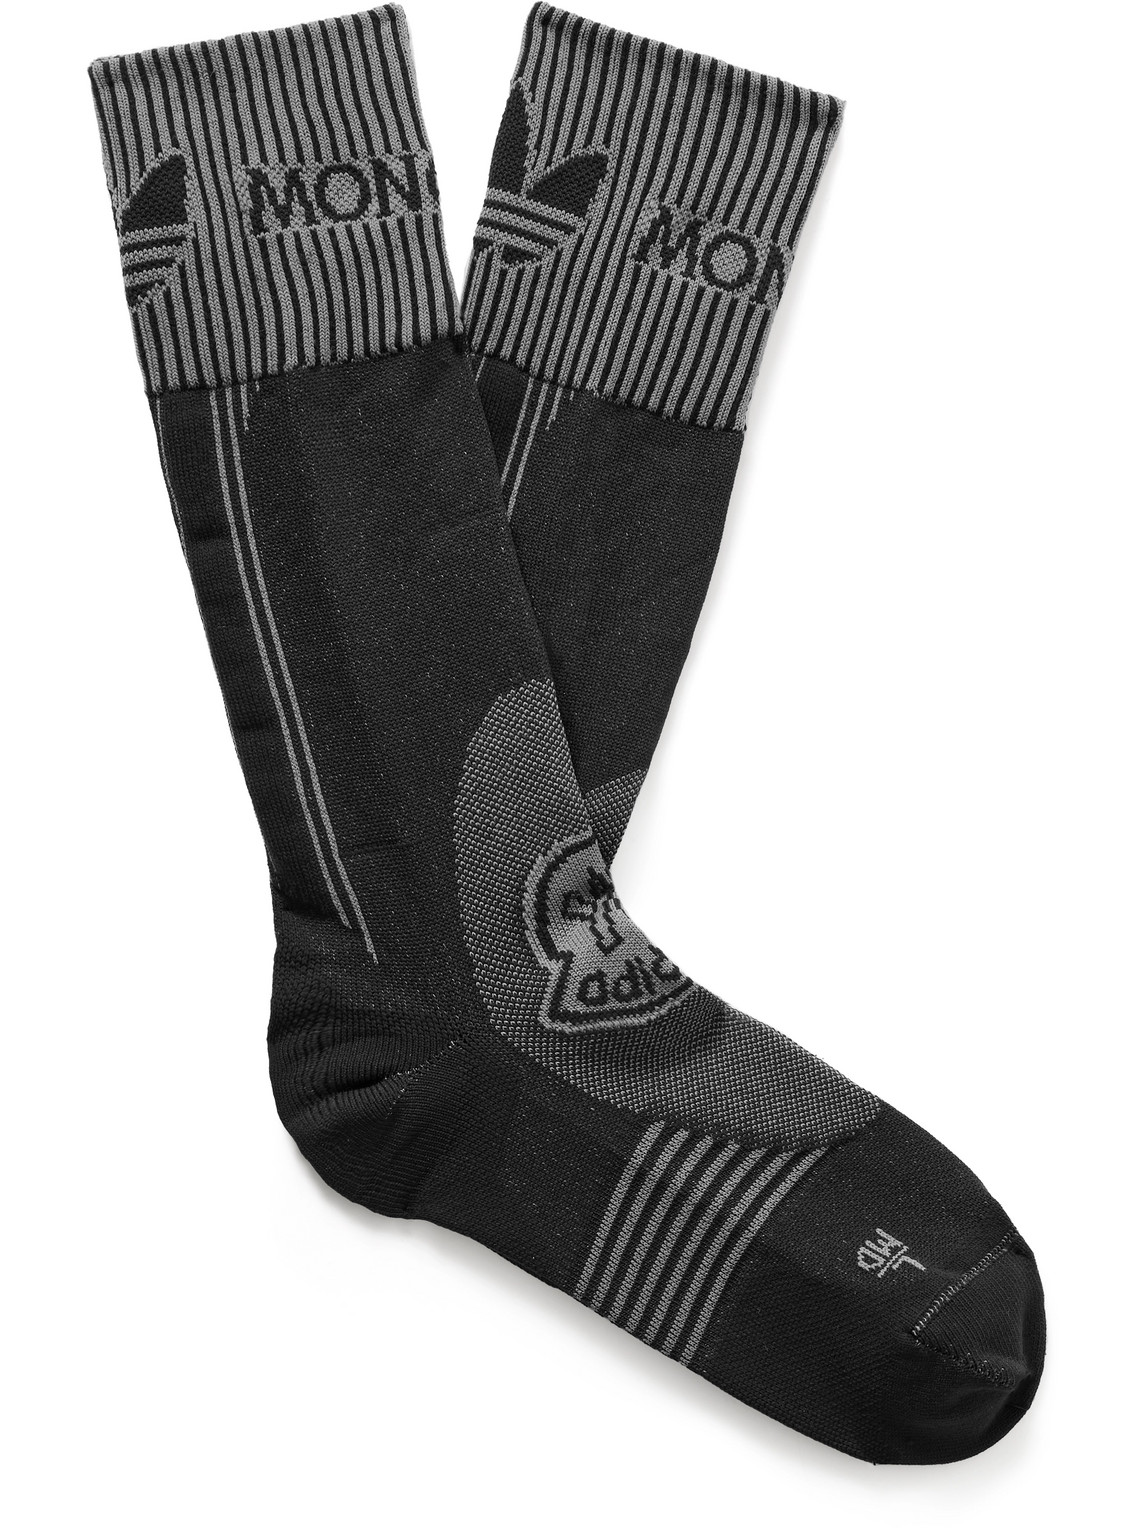 Moncler Genius - adidas Originals Logo-Jacquard Ribbed Recycled Stretch-Knit Socks - Men - Black - S von Moncler Genius